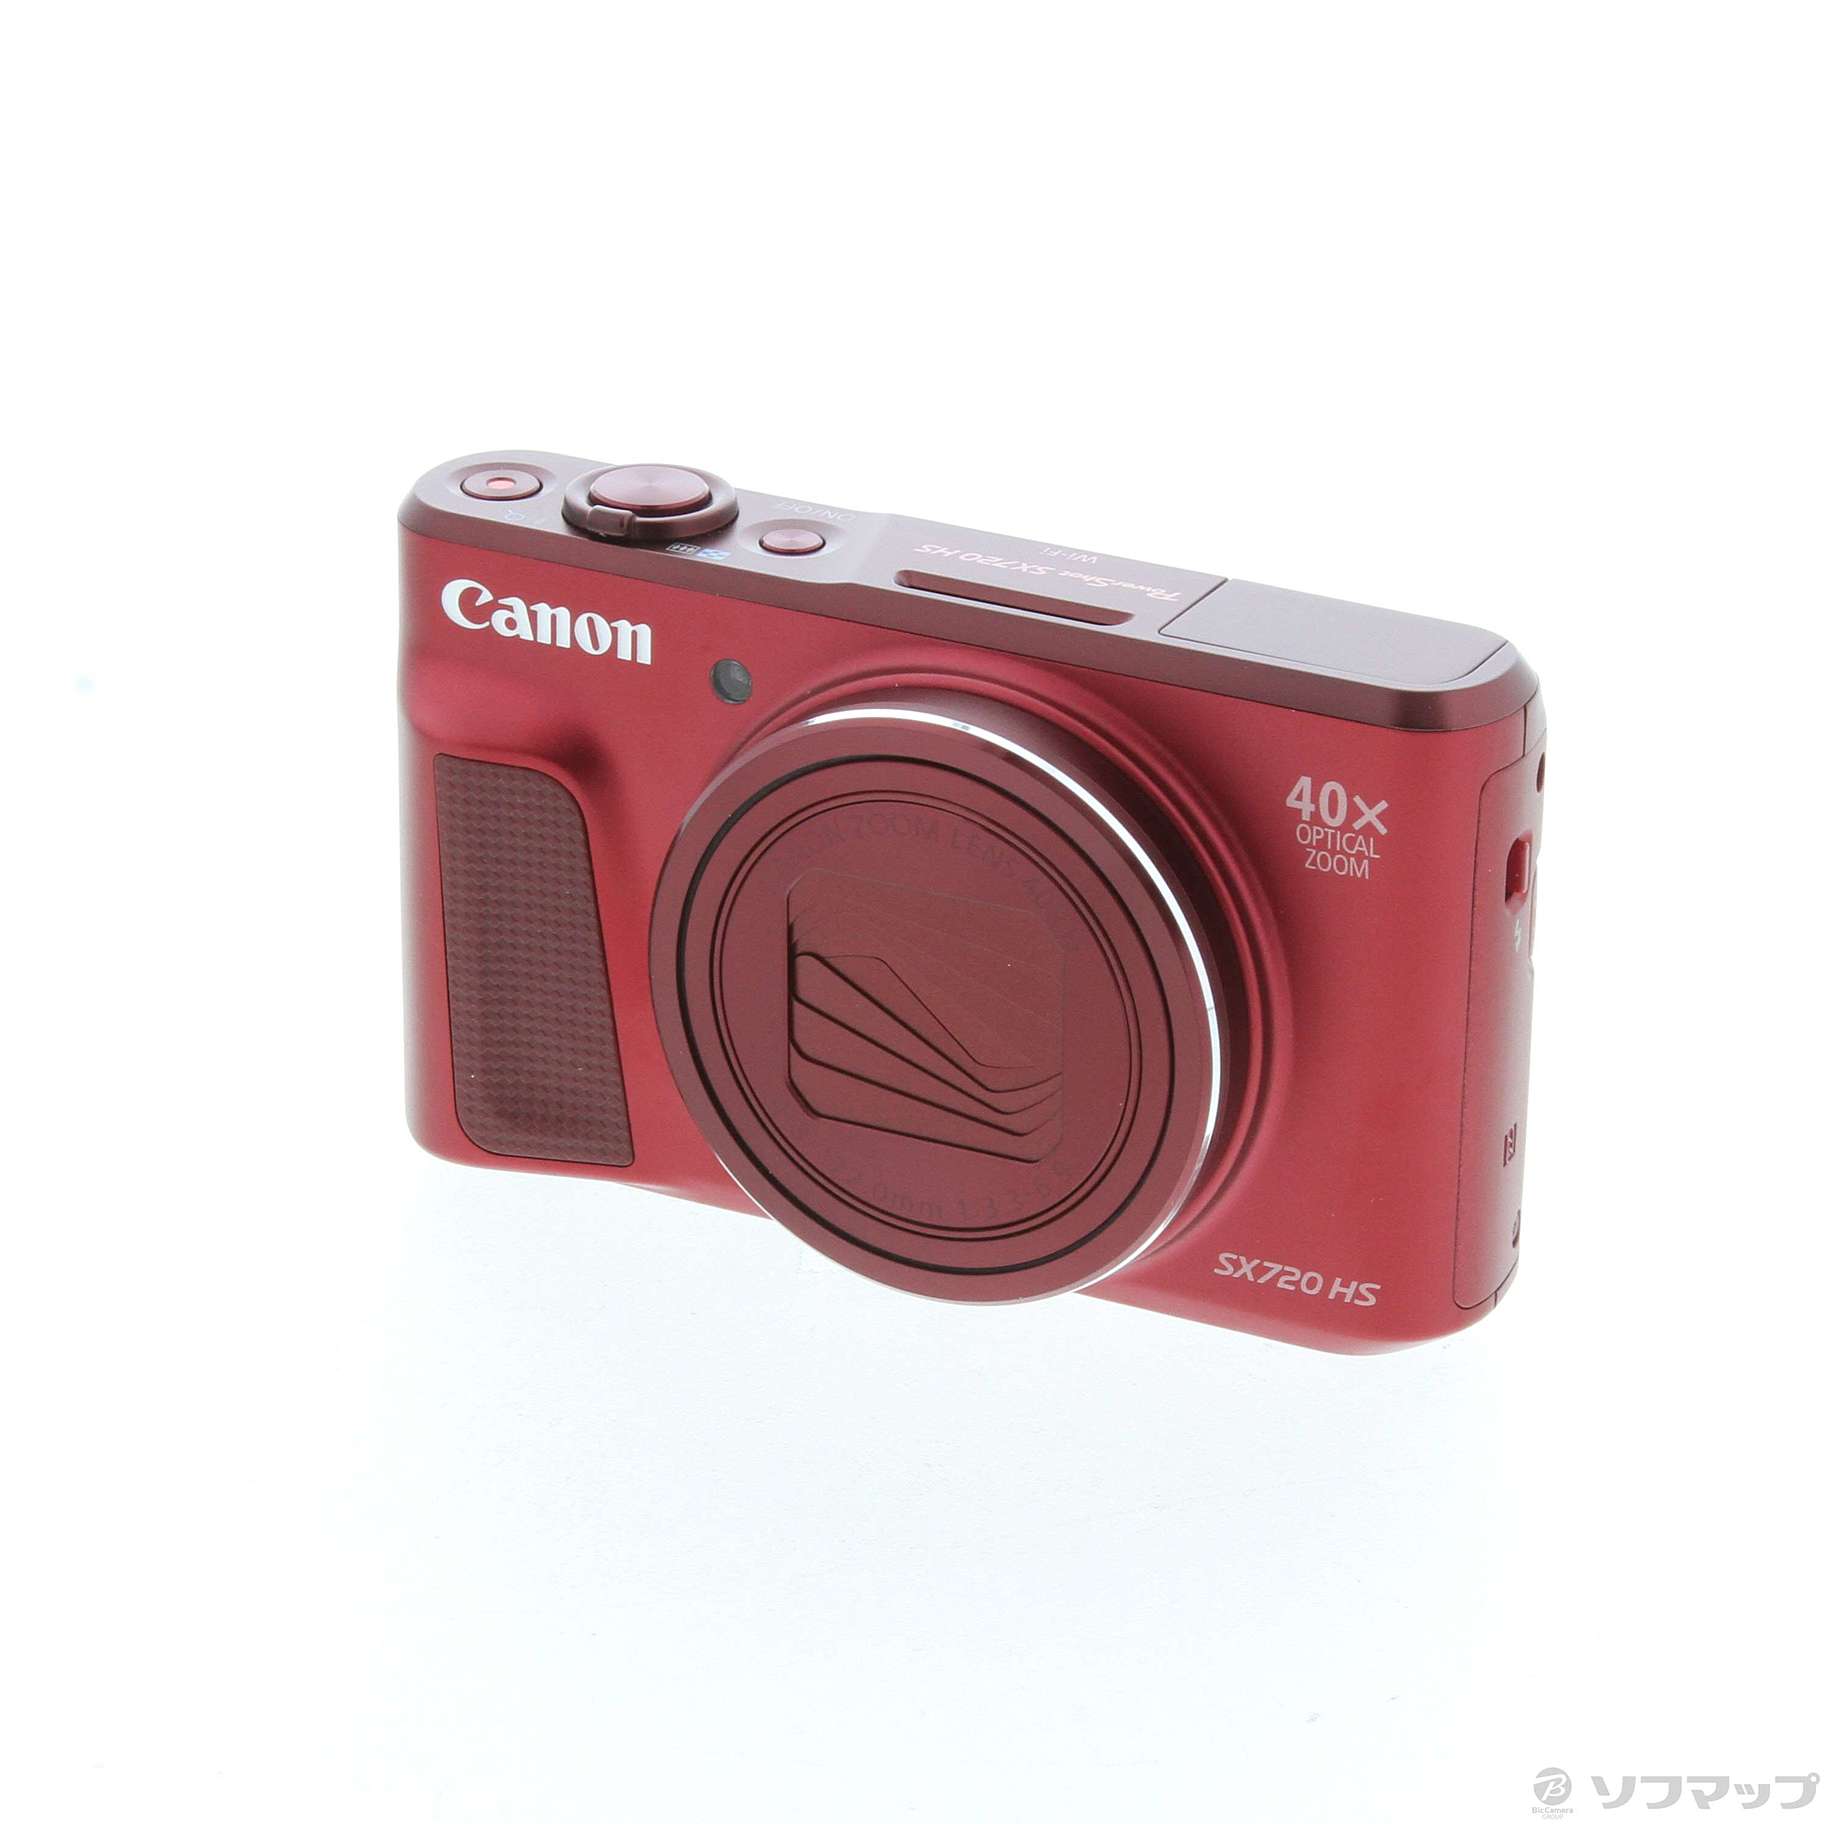 Canon デジタルカメラ PowerShot SX720 HS レッド